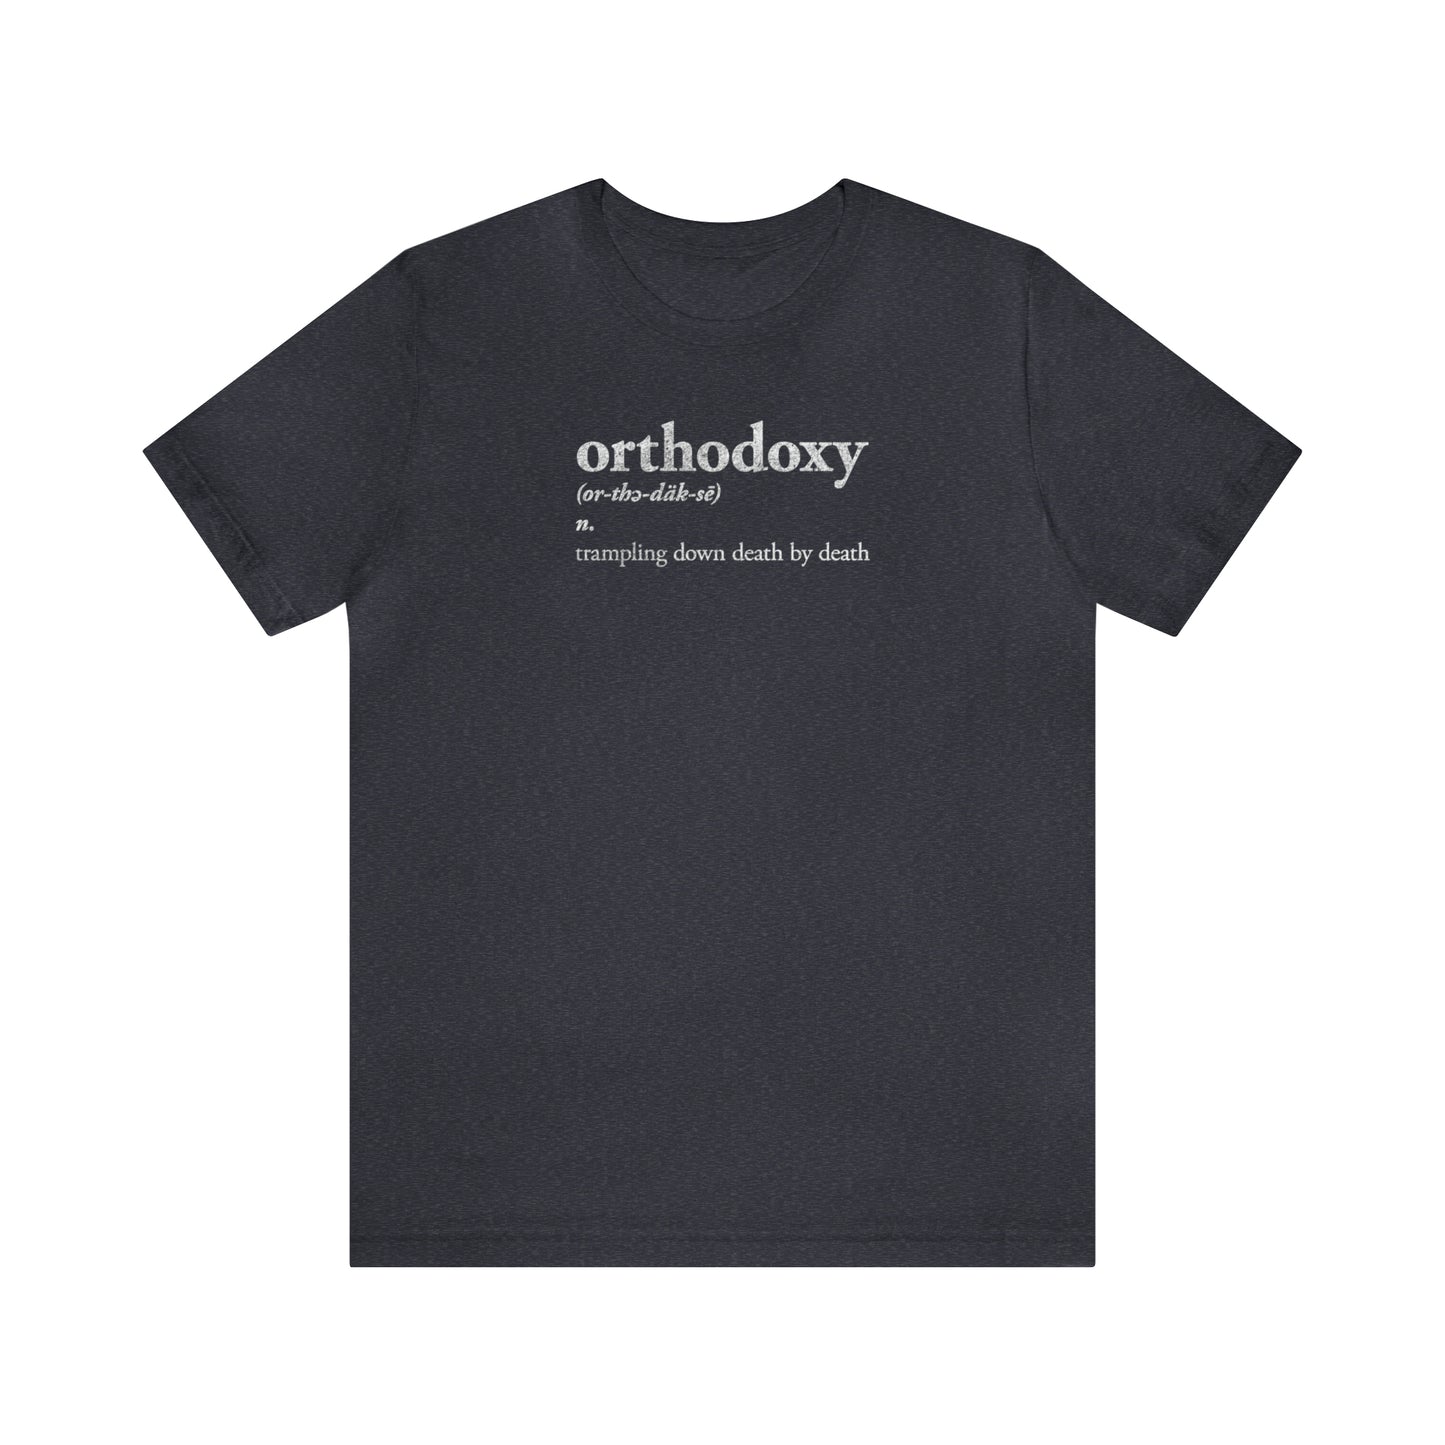 Orthodoxy Definition No. 1 (Trampling Down Death By Death) | Orthodox Christian T-Shirt